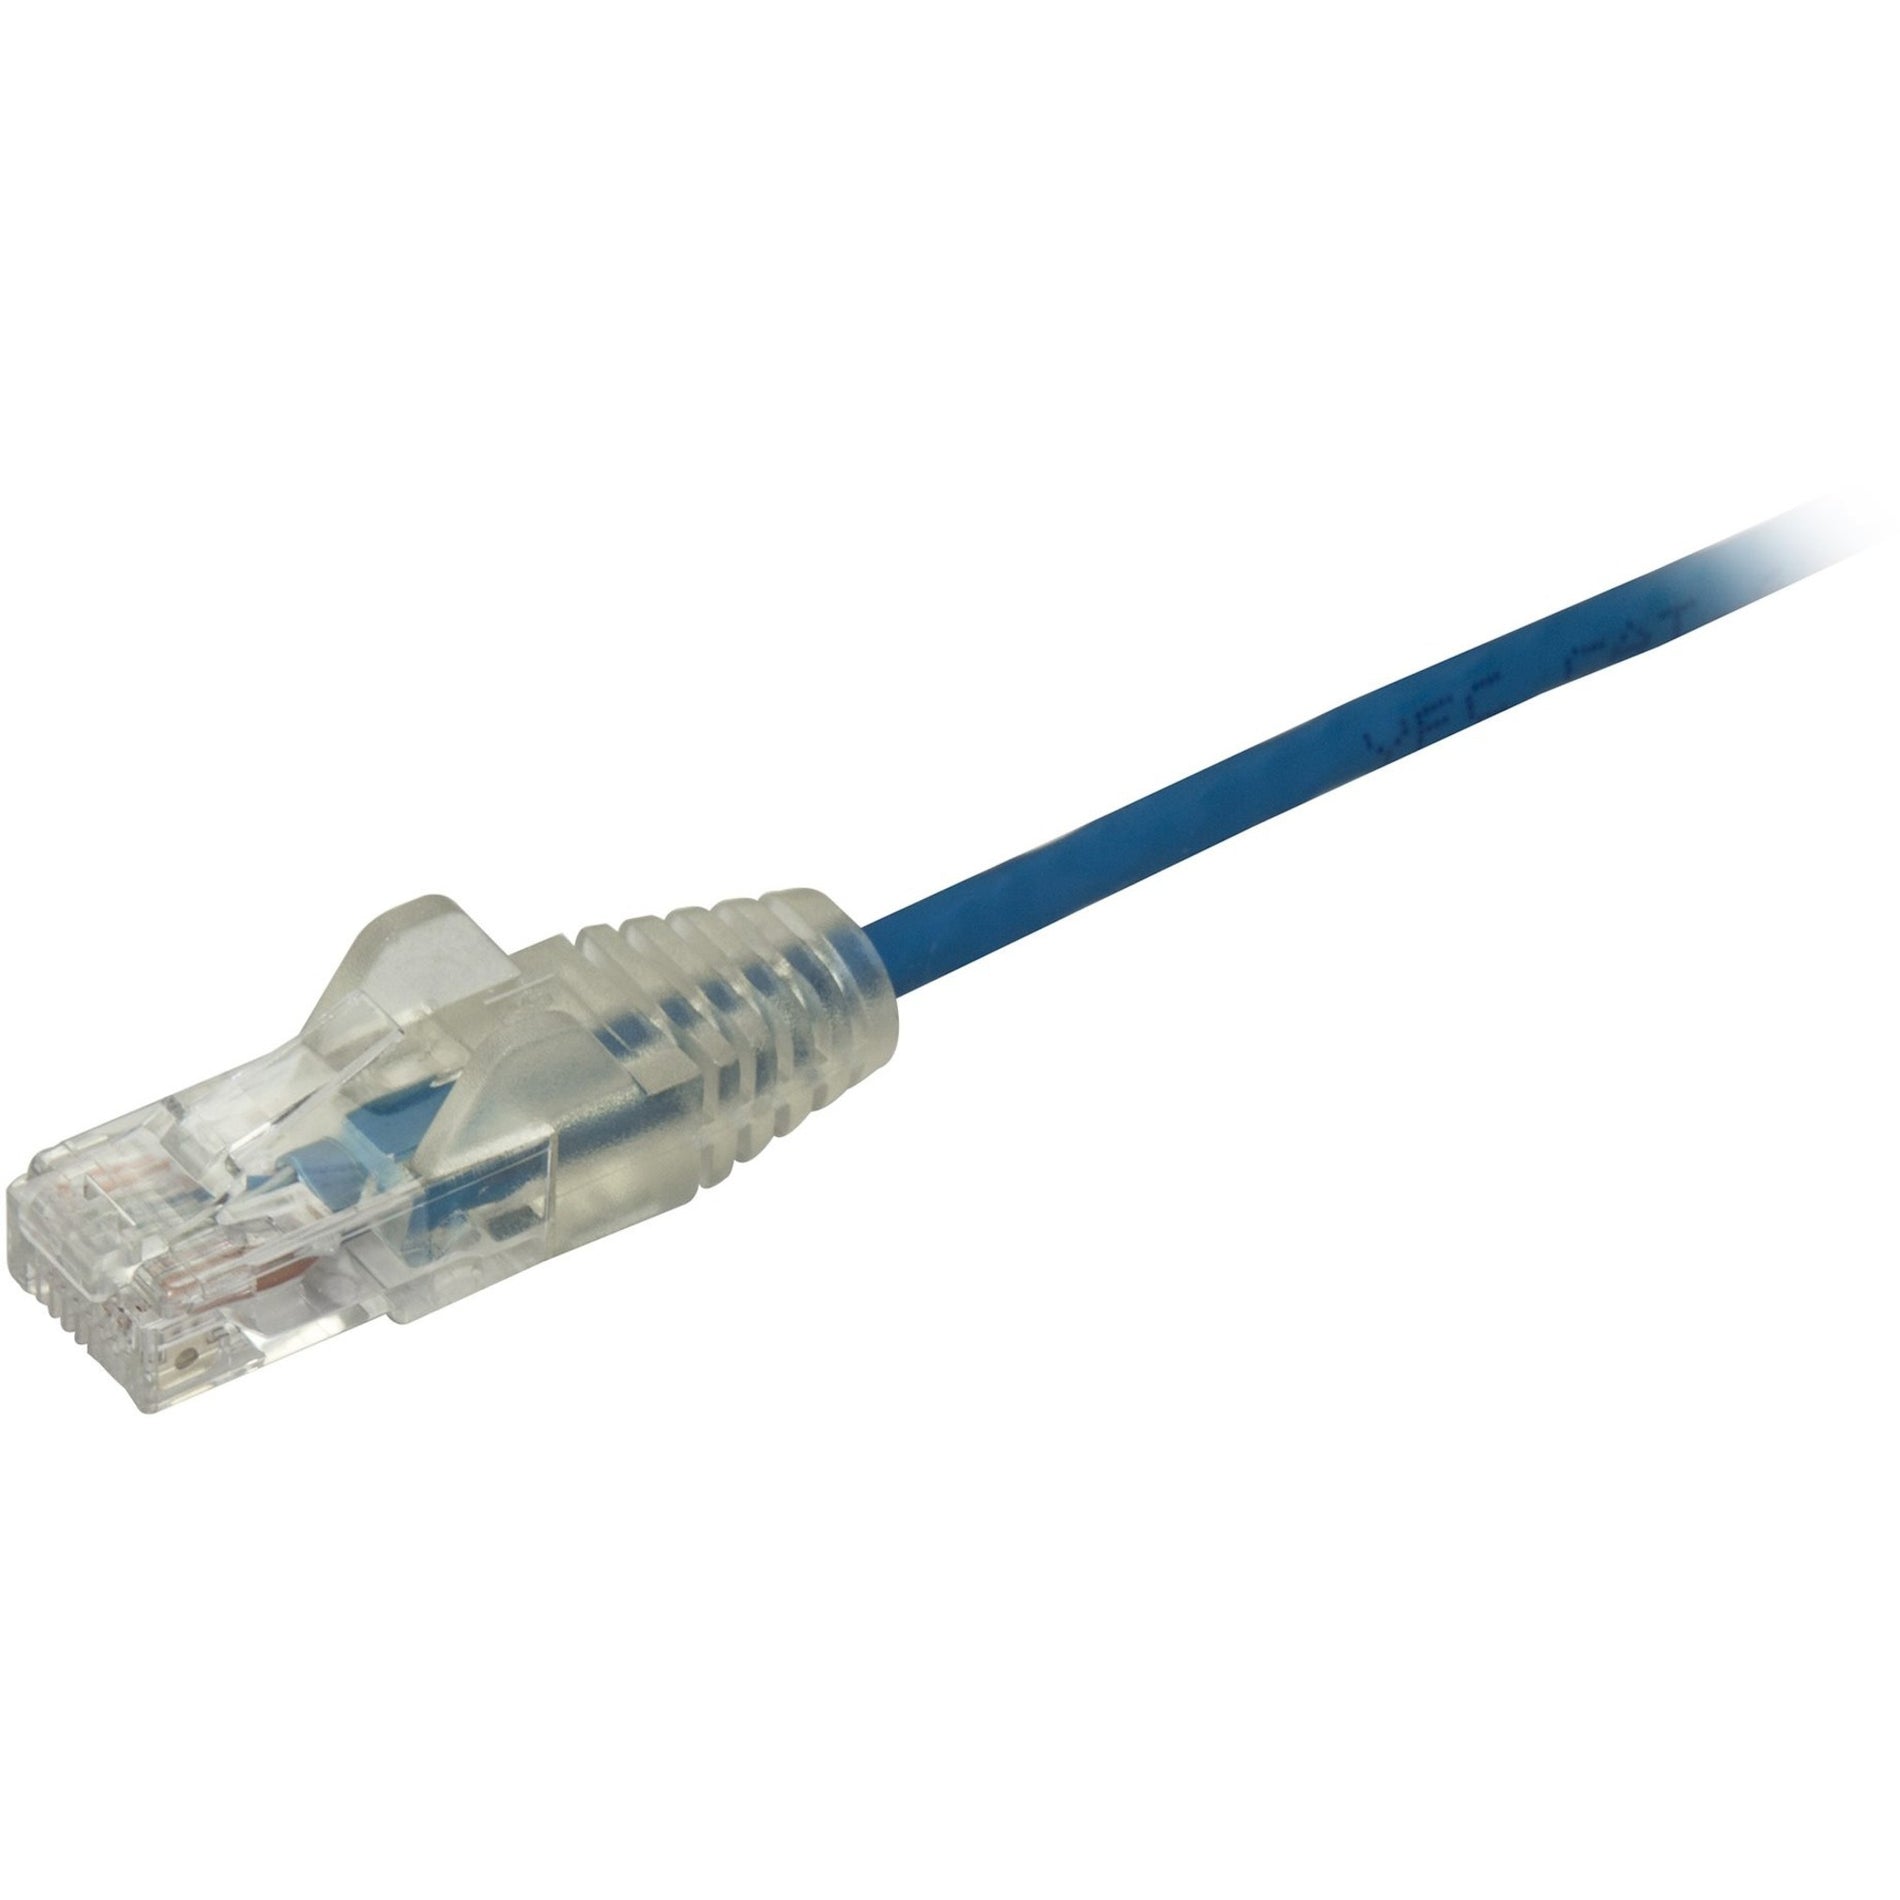 StarTech.com N6PAT3BLS Cat6 Patch Network Cable, 3 ft Blue Ethernet Cable - Slim, Snagless RJ45 Connectors, Cat6 Cable, Cat6 Patch Cable, Cat6 Network Cable